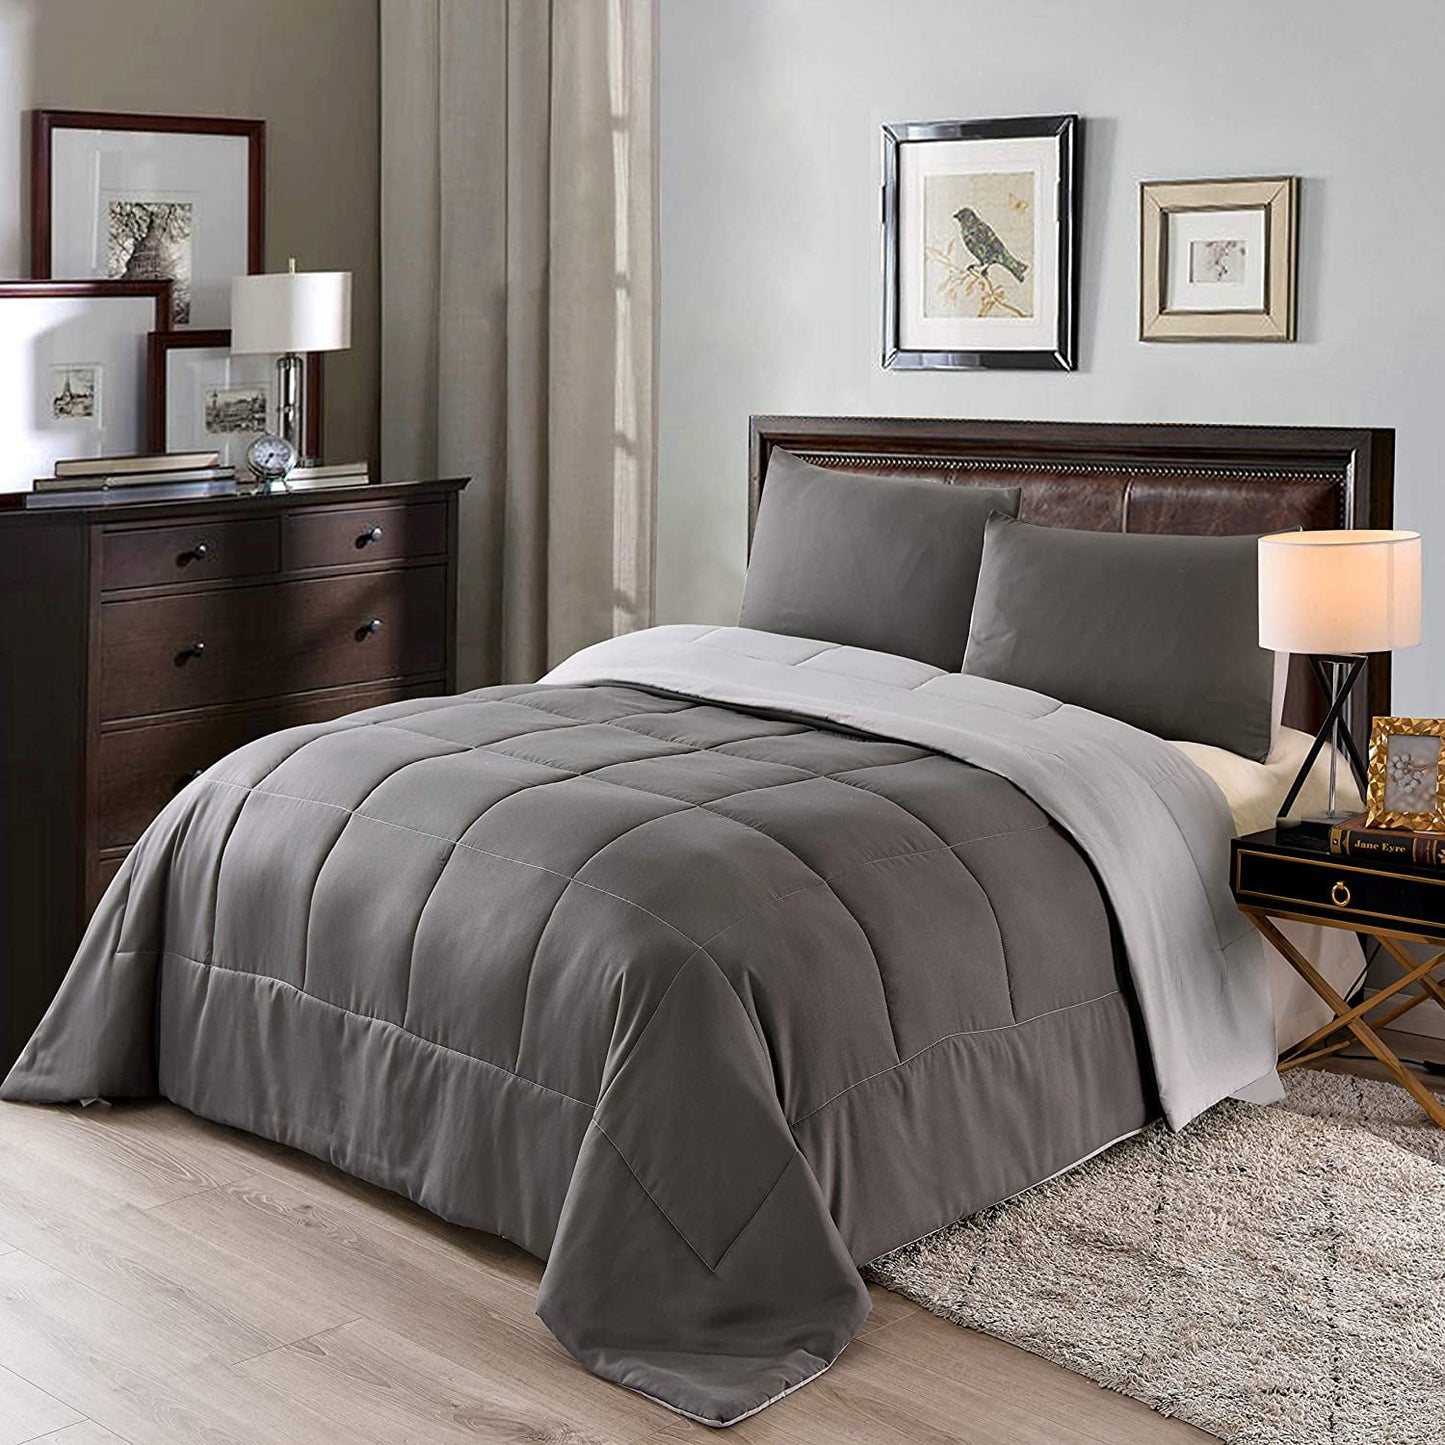 Exclusivo Mezcla Lightweight Reversible 3-Piece Comforter Set All Seasons, Down Alternative Comforter with 2 Pillow Shams, King Size, Grey